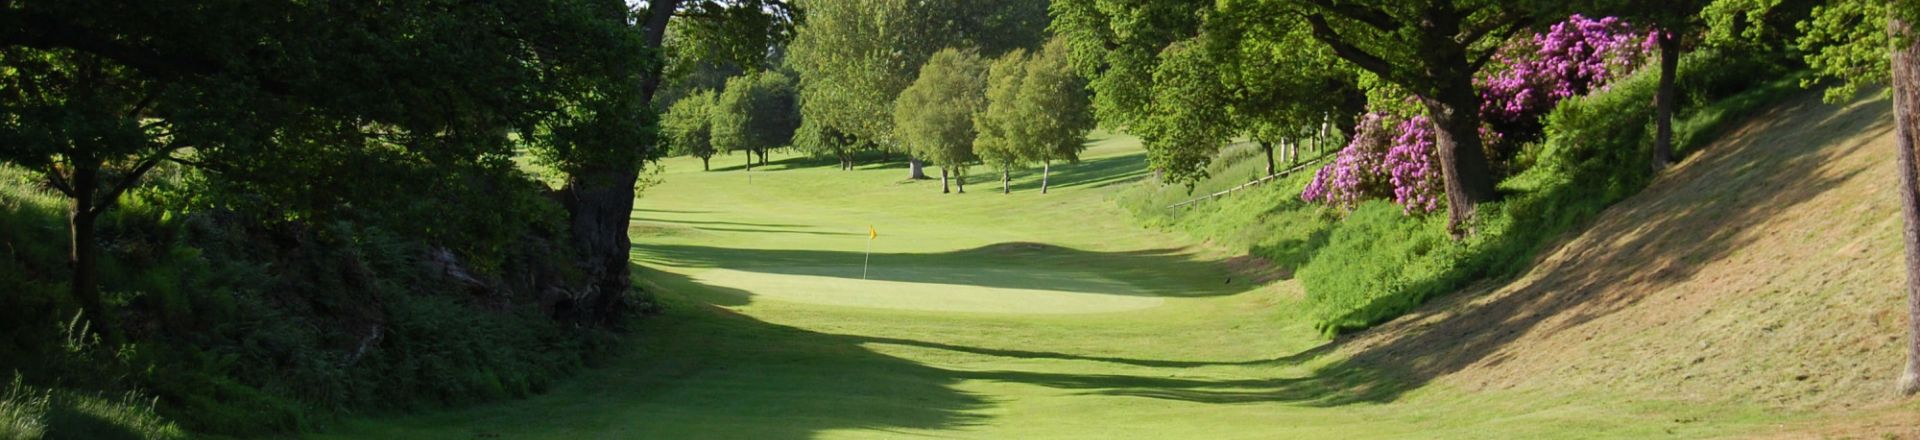 Hawkstone Park Championship Golf Course